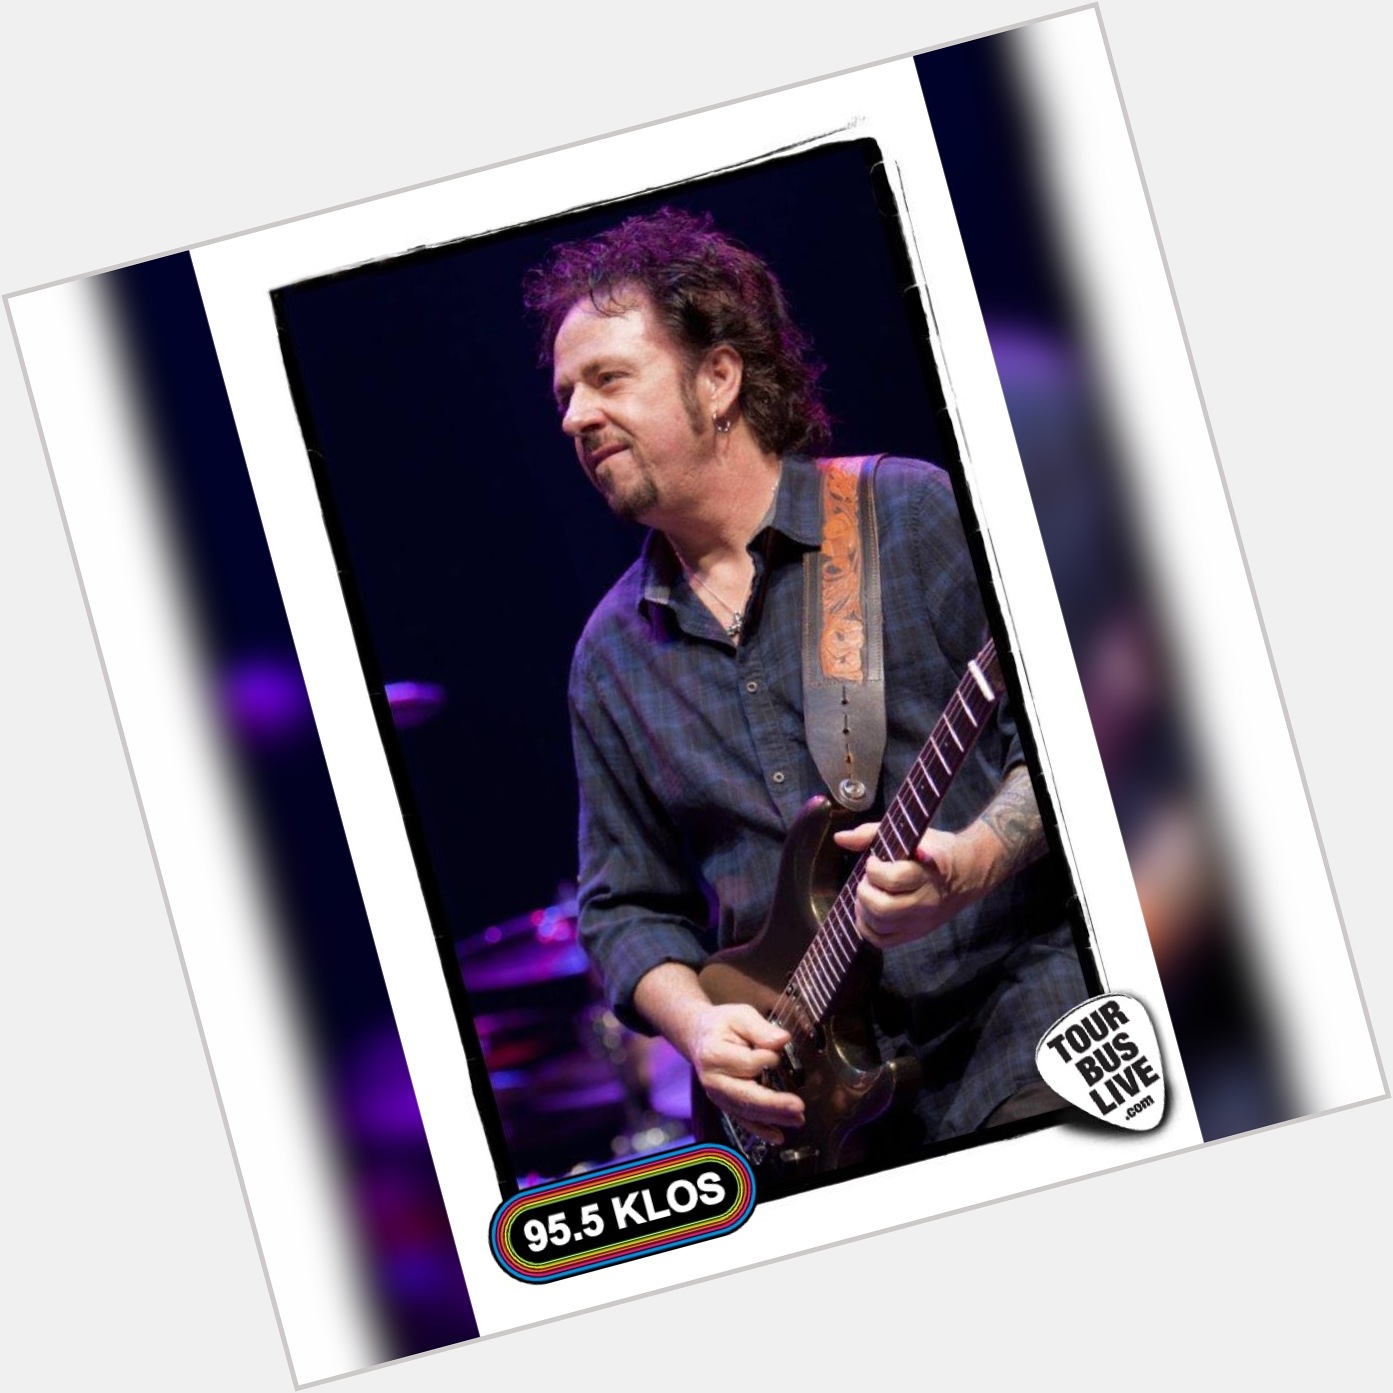 Happy Birthday to Toto\s, Steve Lukather!
photo: 